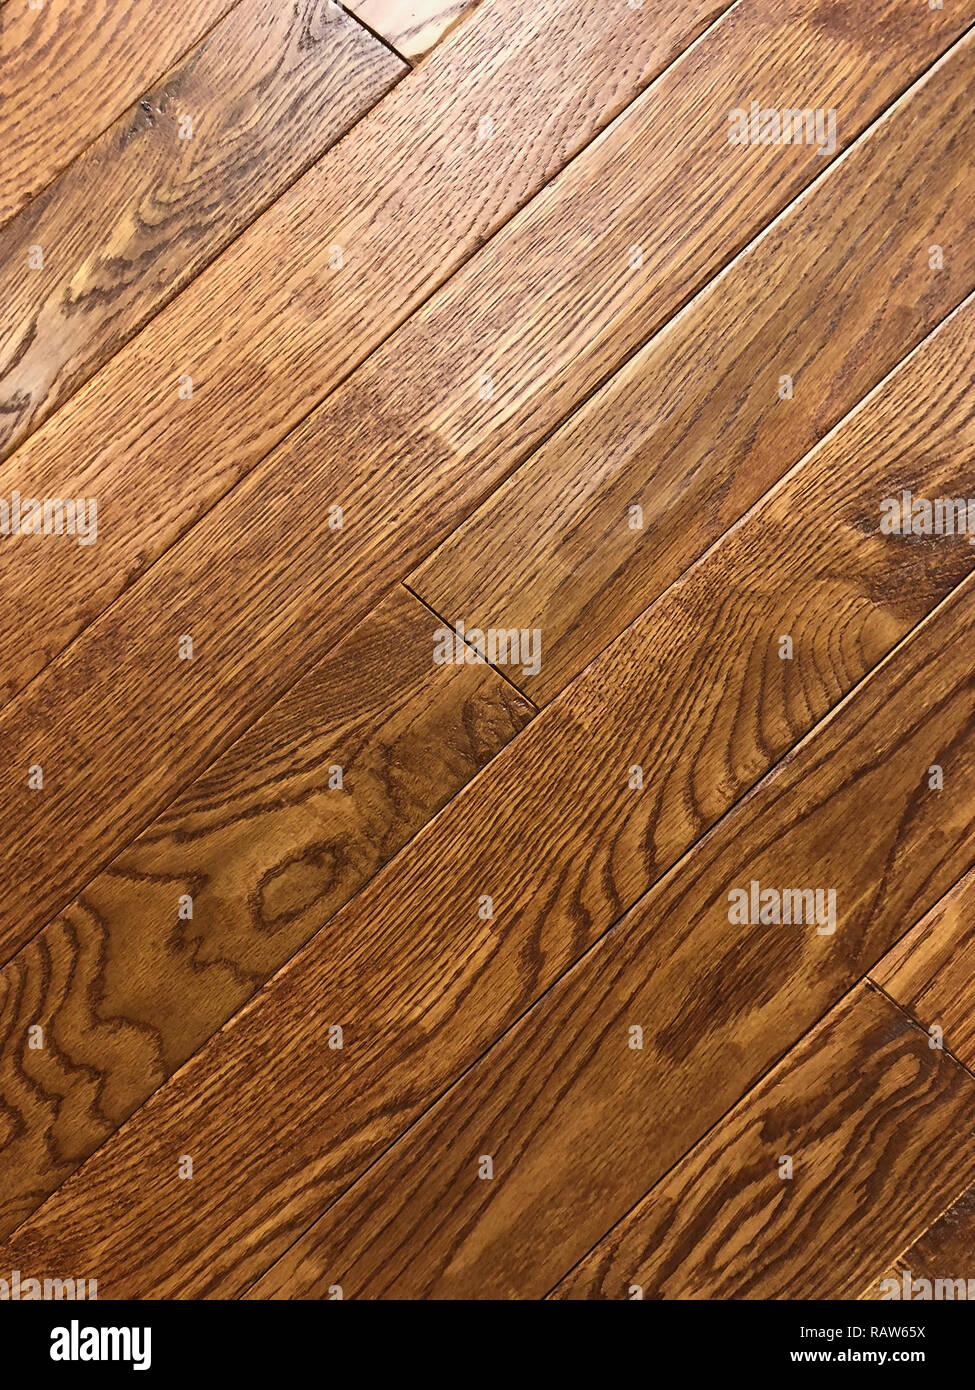 Hardwood floor made of natural maple wood Stock Photo